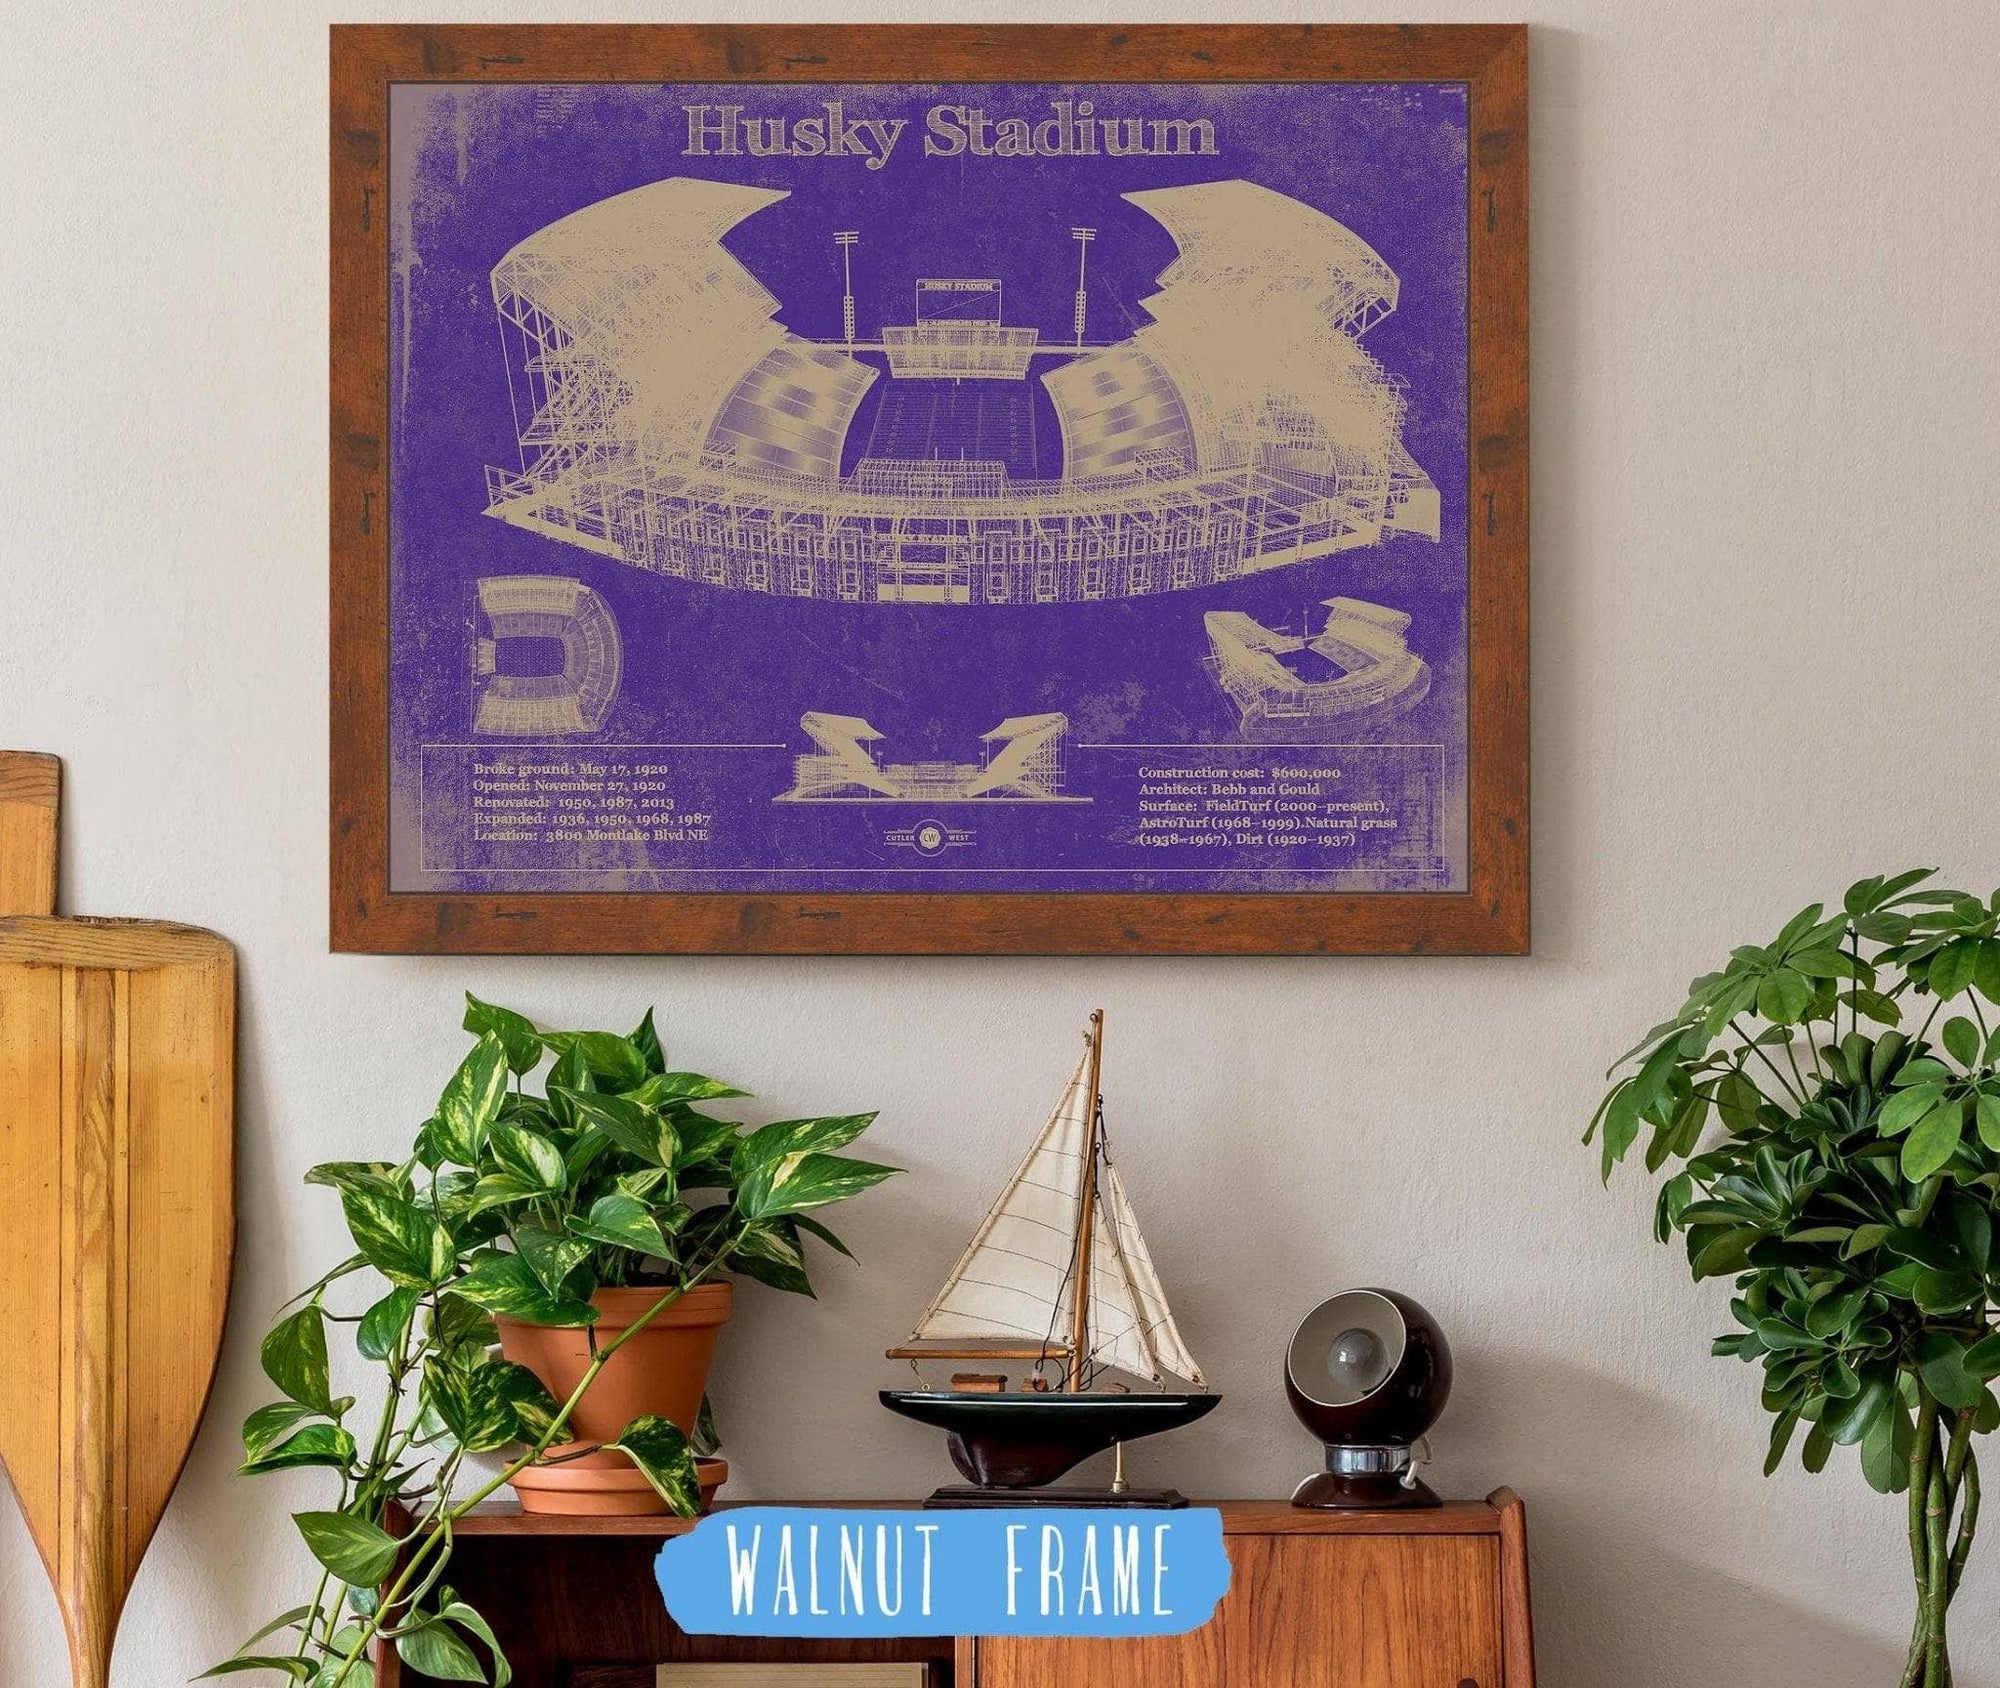 Cutler West 14" x 11" / Walnut Frame Washington Huskies Art - Husky Stadium Vintage Stadium Blueprint Art Print 835000008-14"-x-11"59432